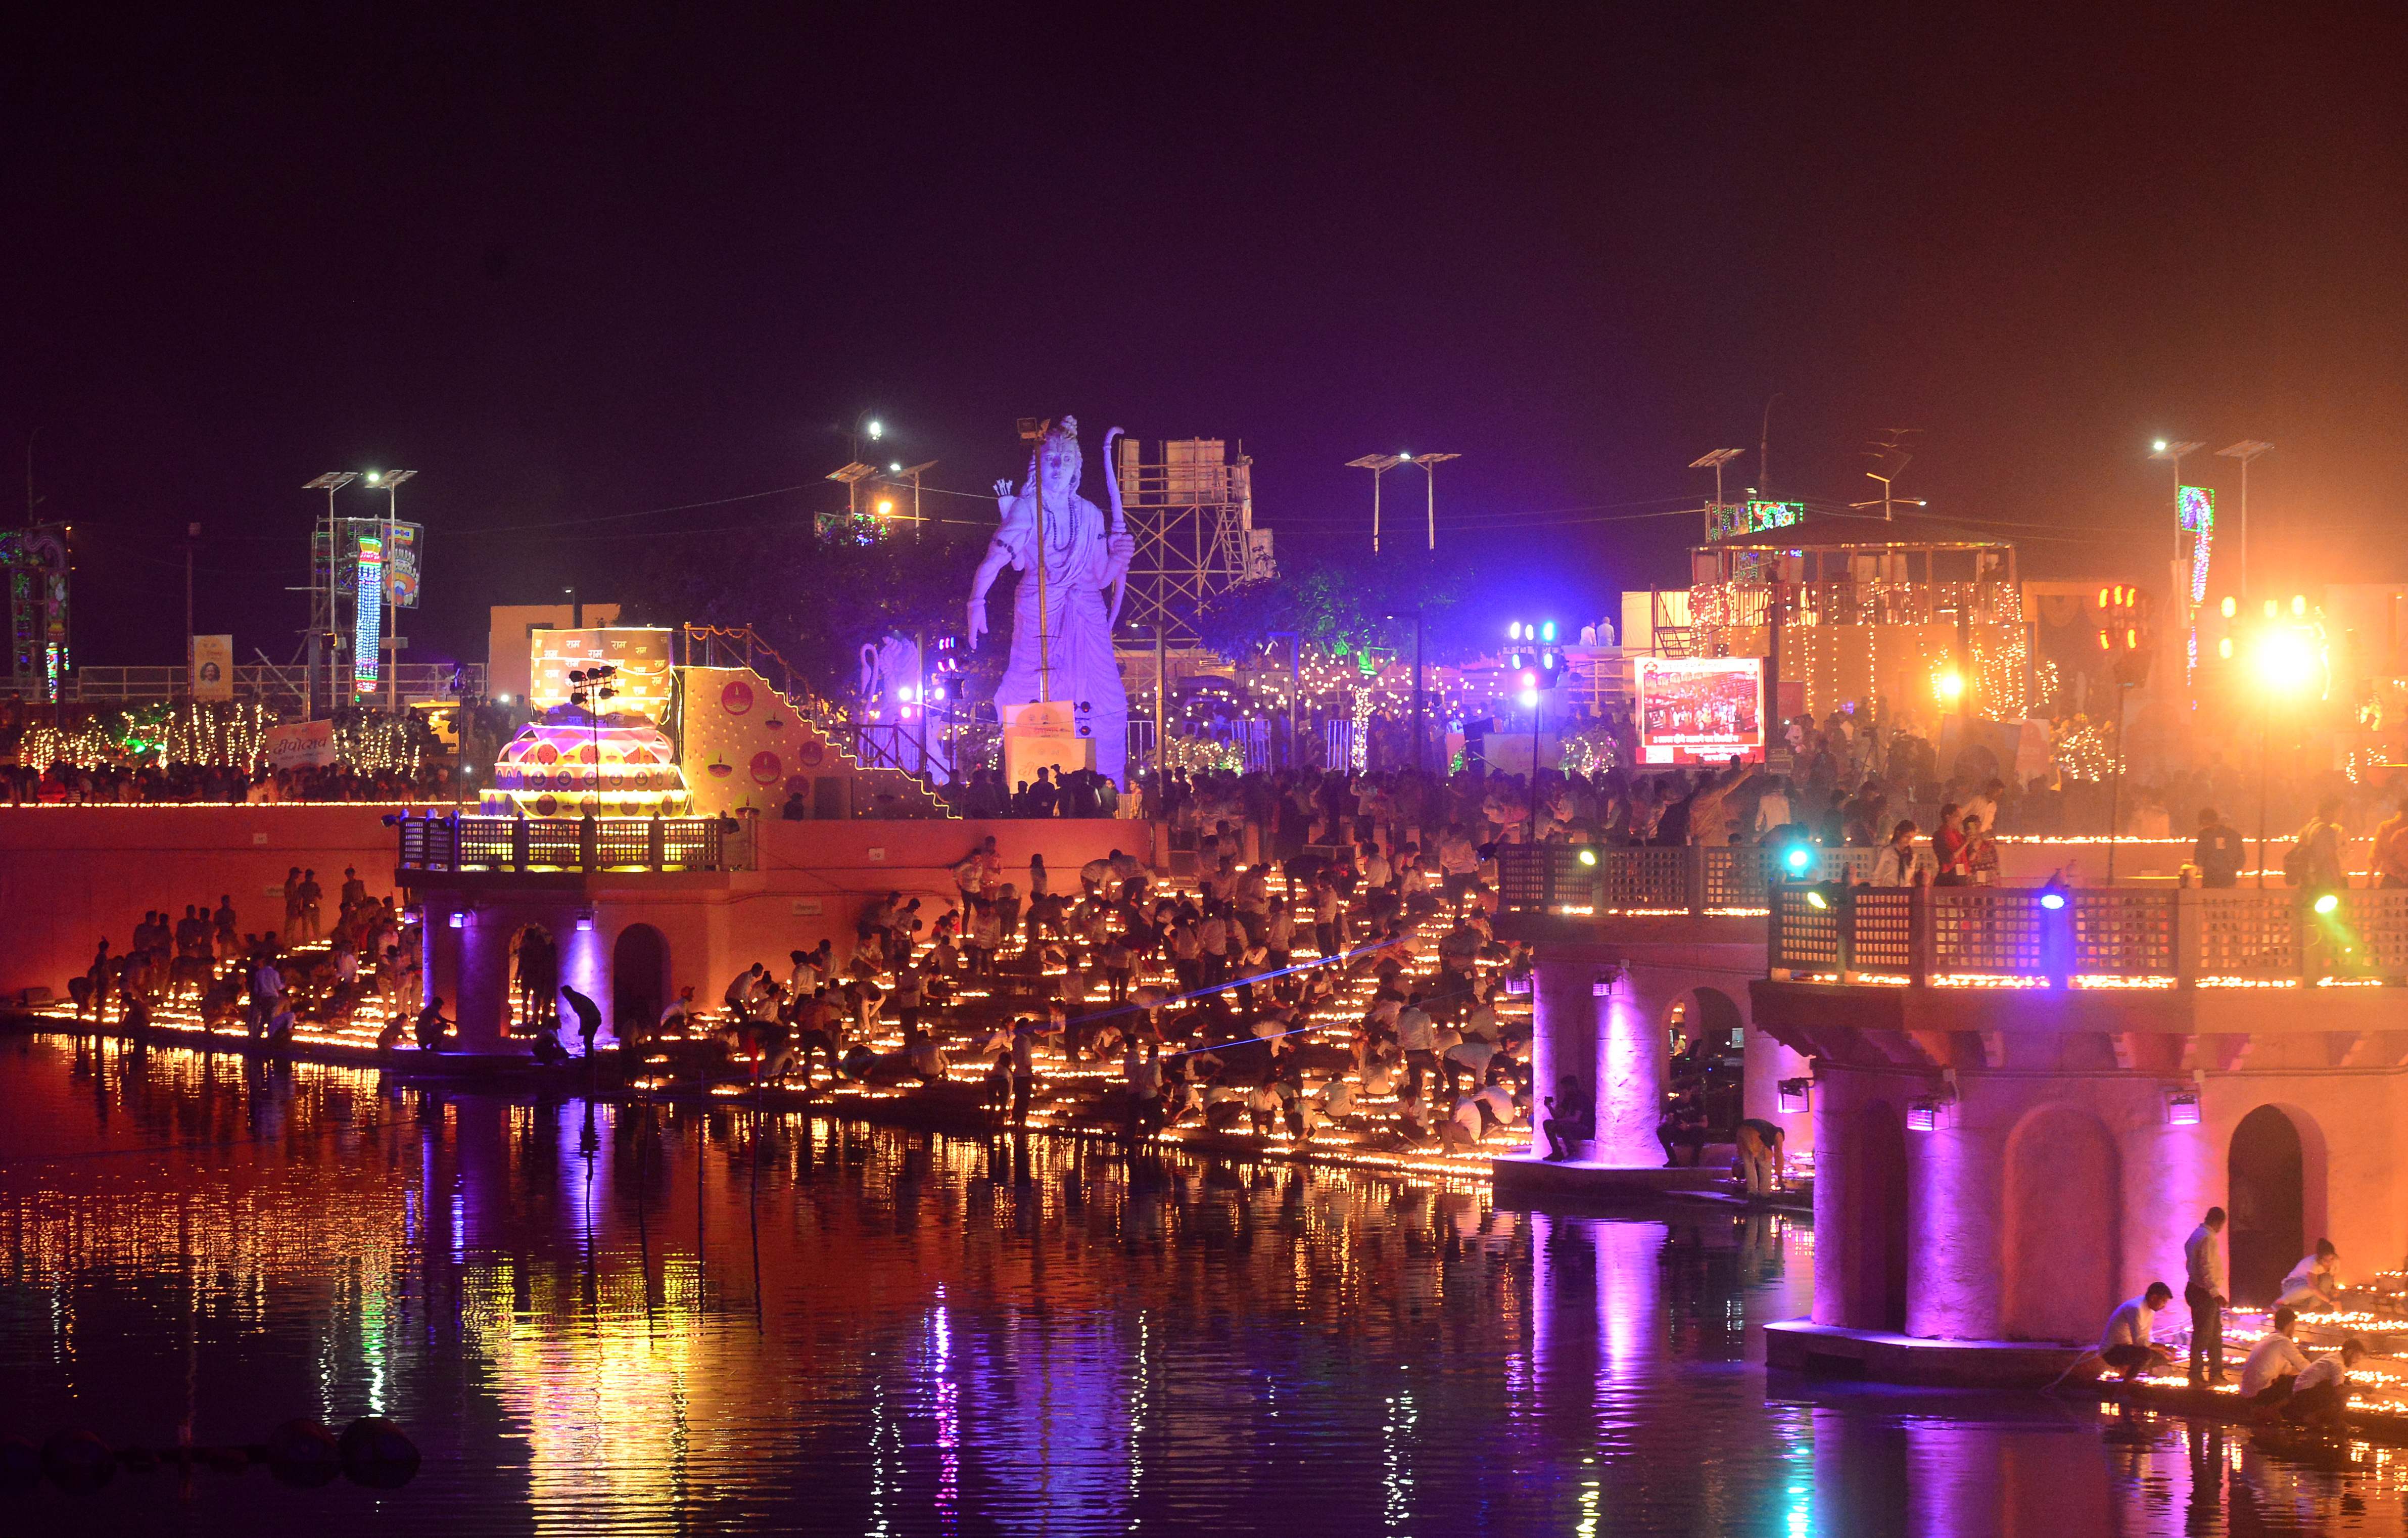 Festival of lights: Hindu community celebrates Diwali 